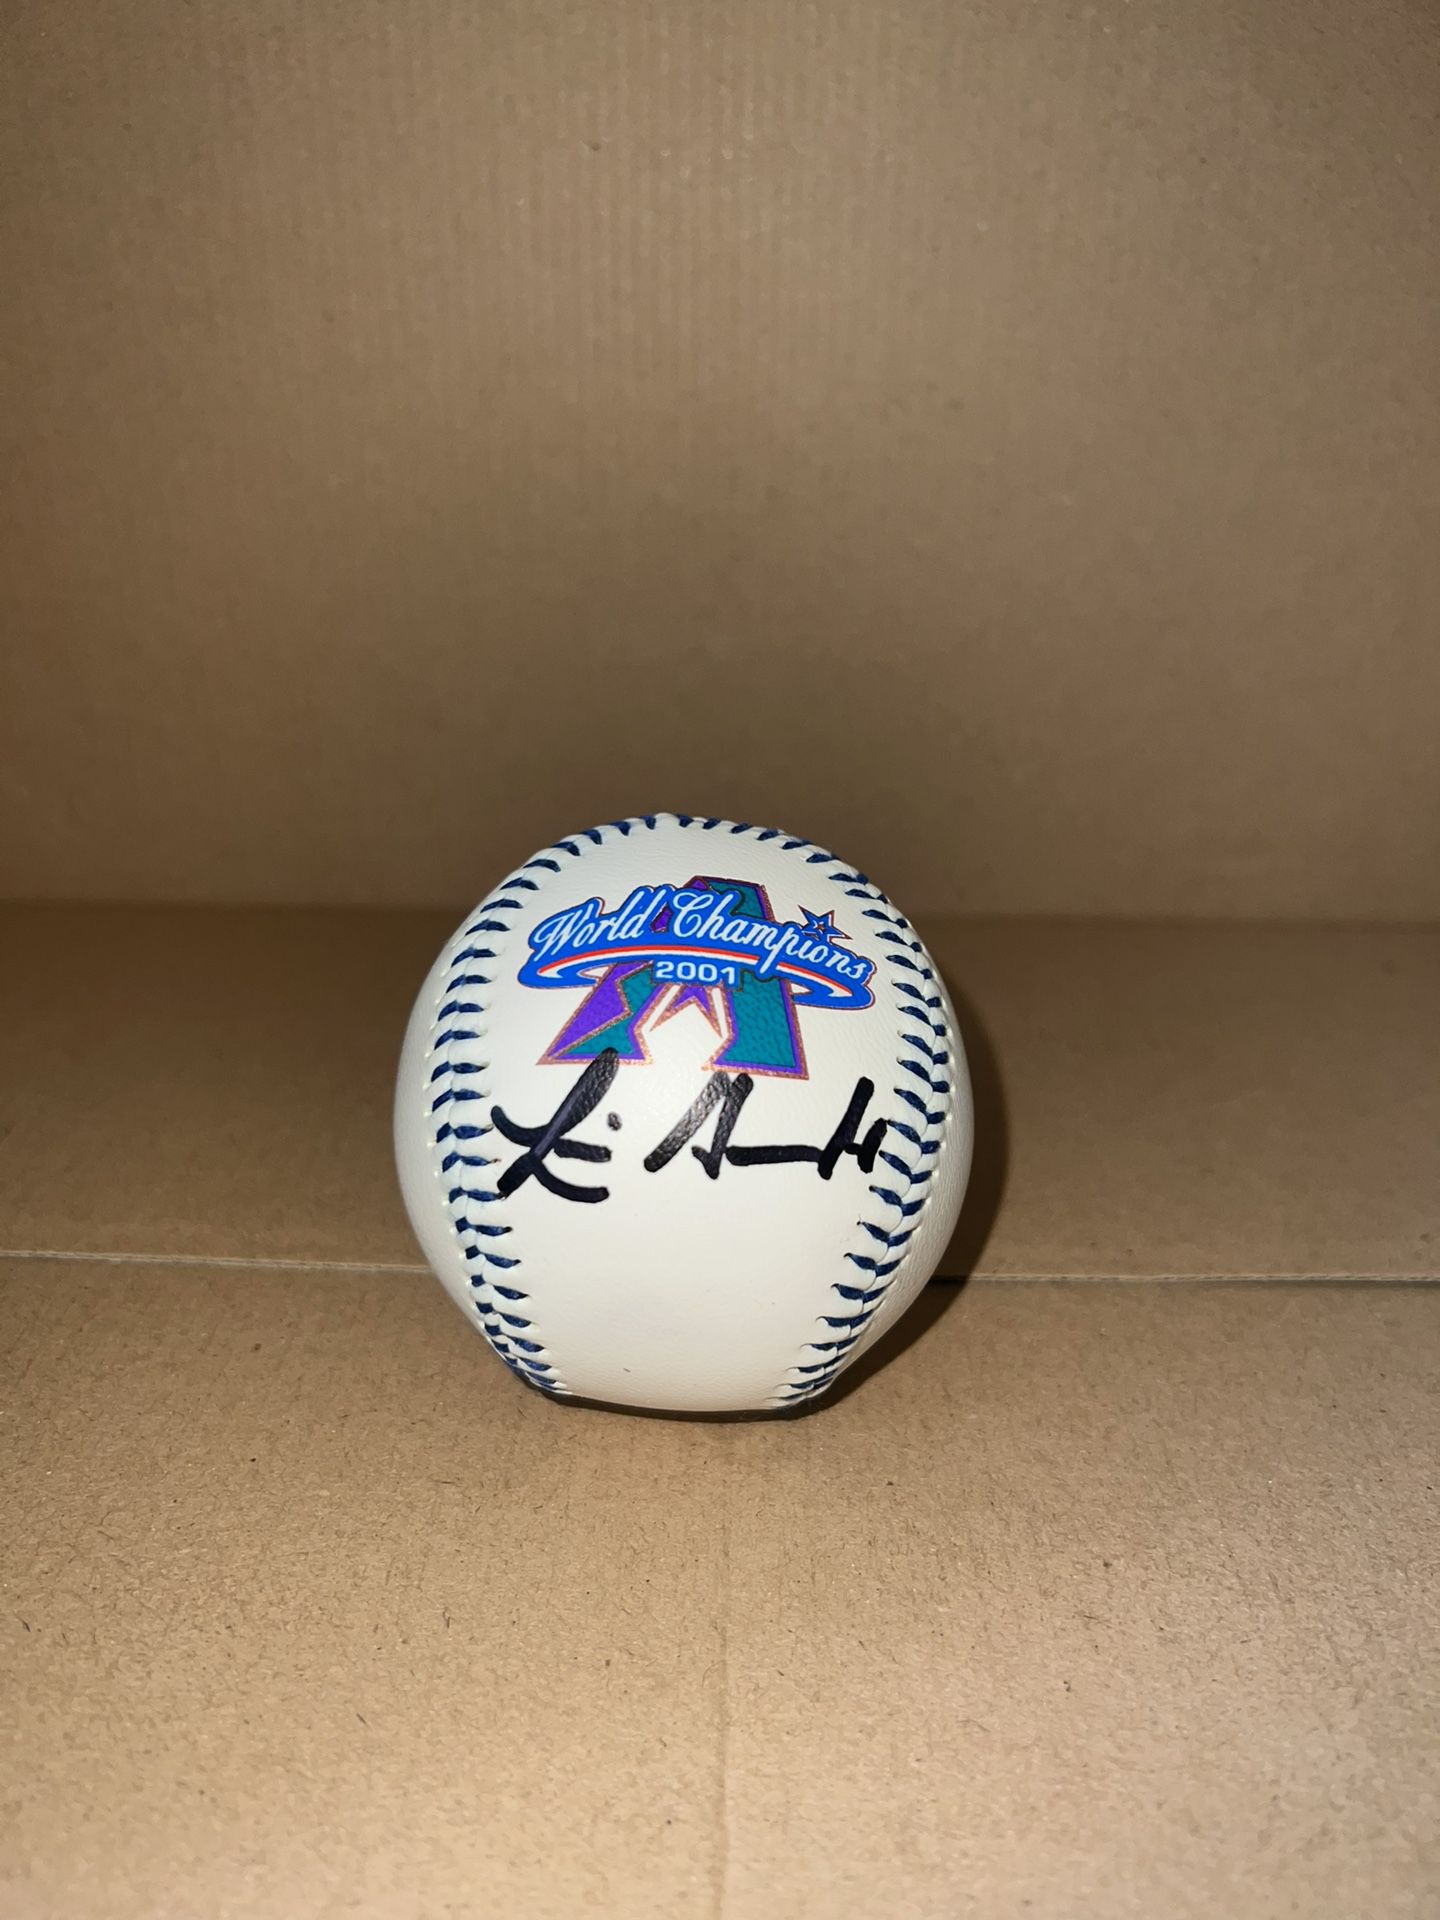 Autographed Luis Gonzalez Baseball for Sale in Flagstaff, AZ - OfferUp